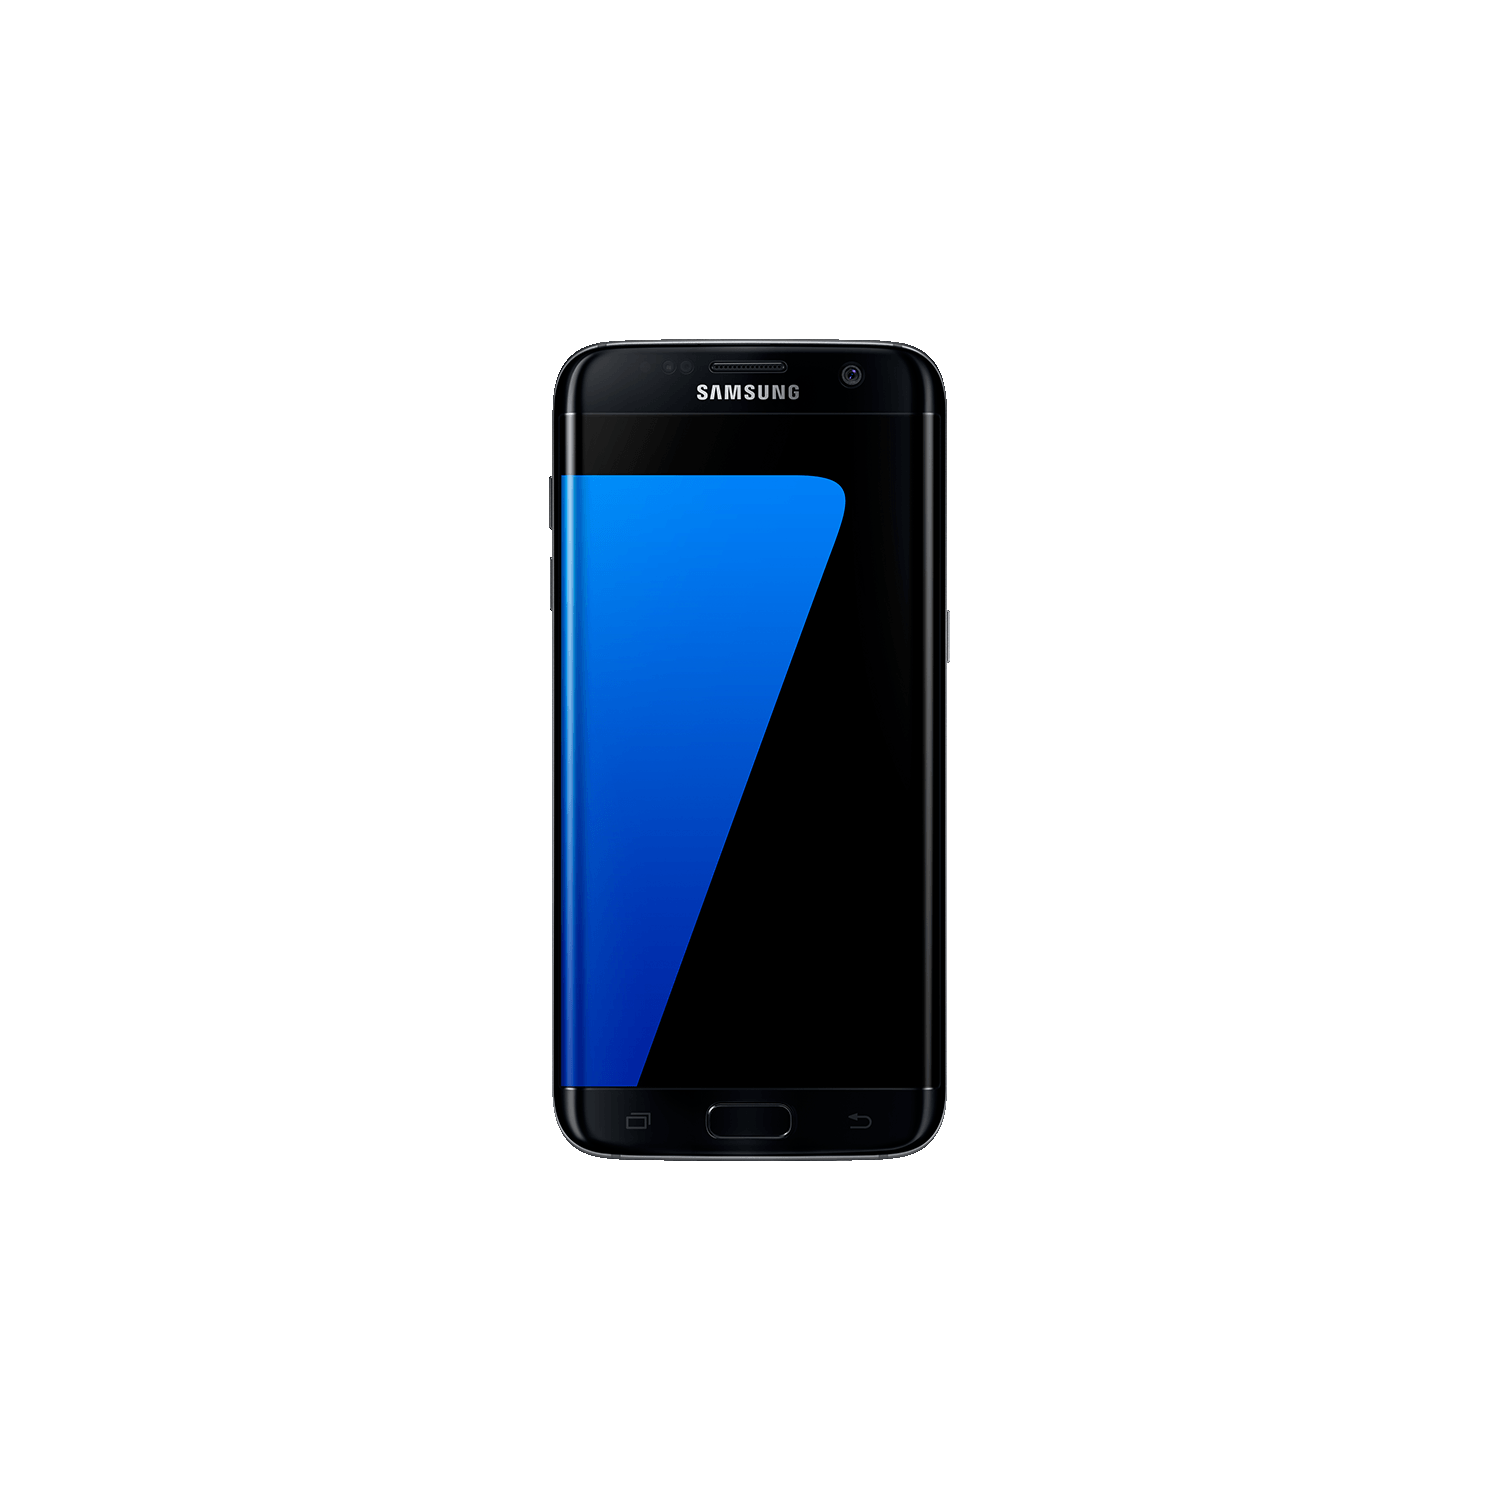 Refurbished (Good) - Samsung Galaxy S7 edge 32GB Smartphone - Black Onyx - Unlocked